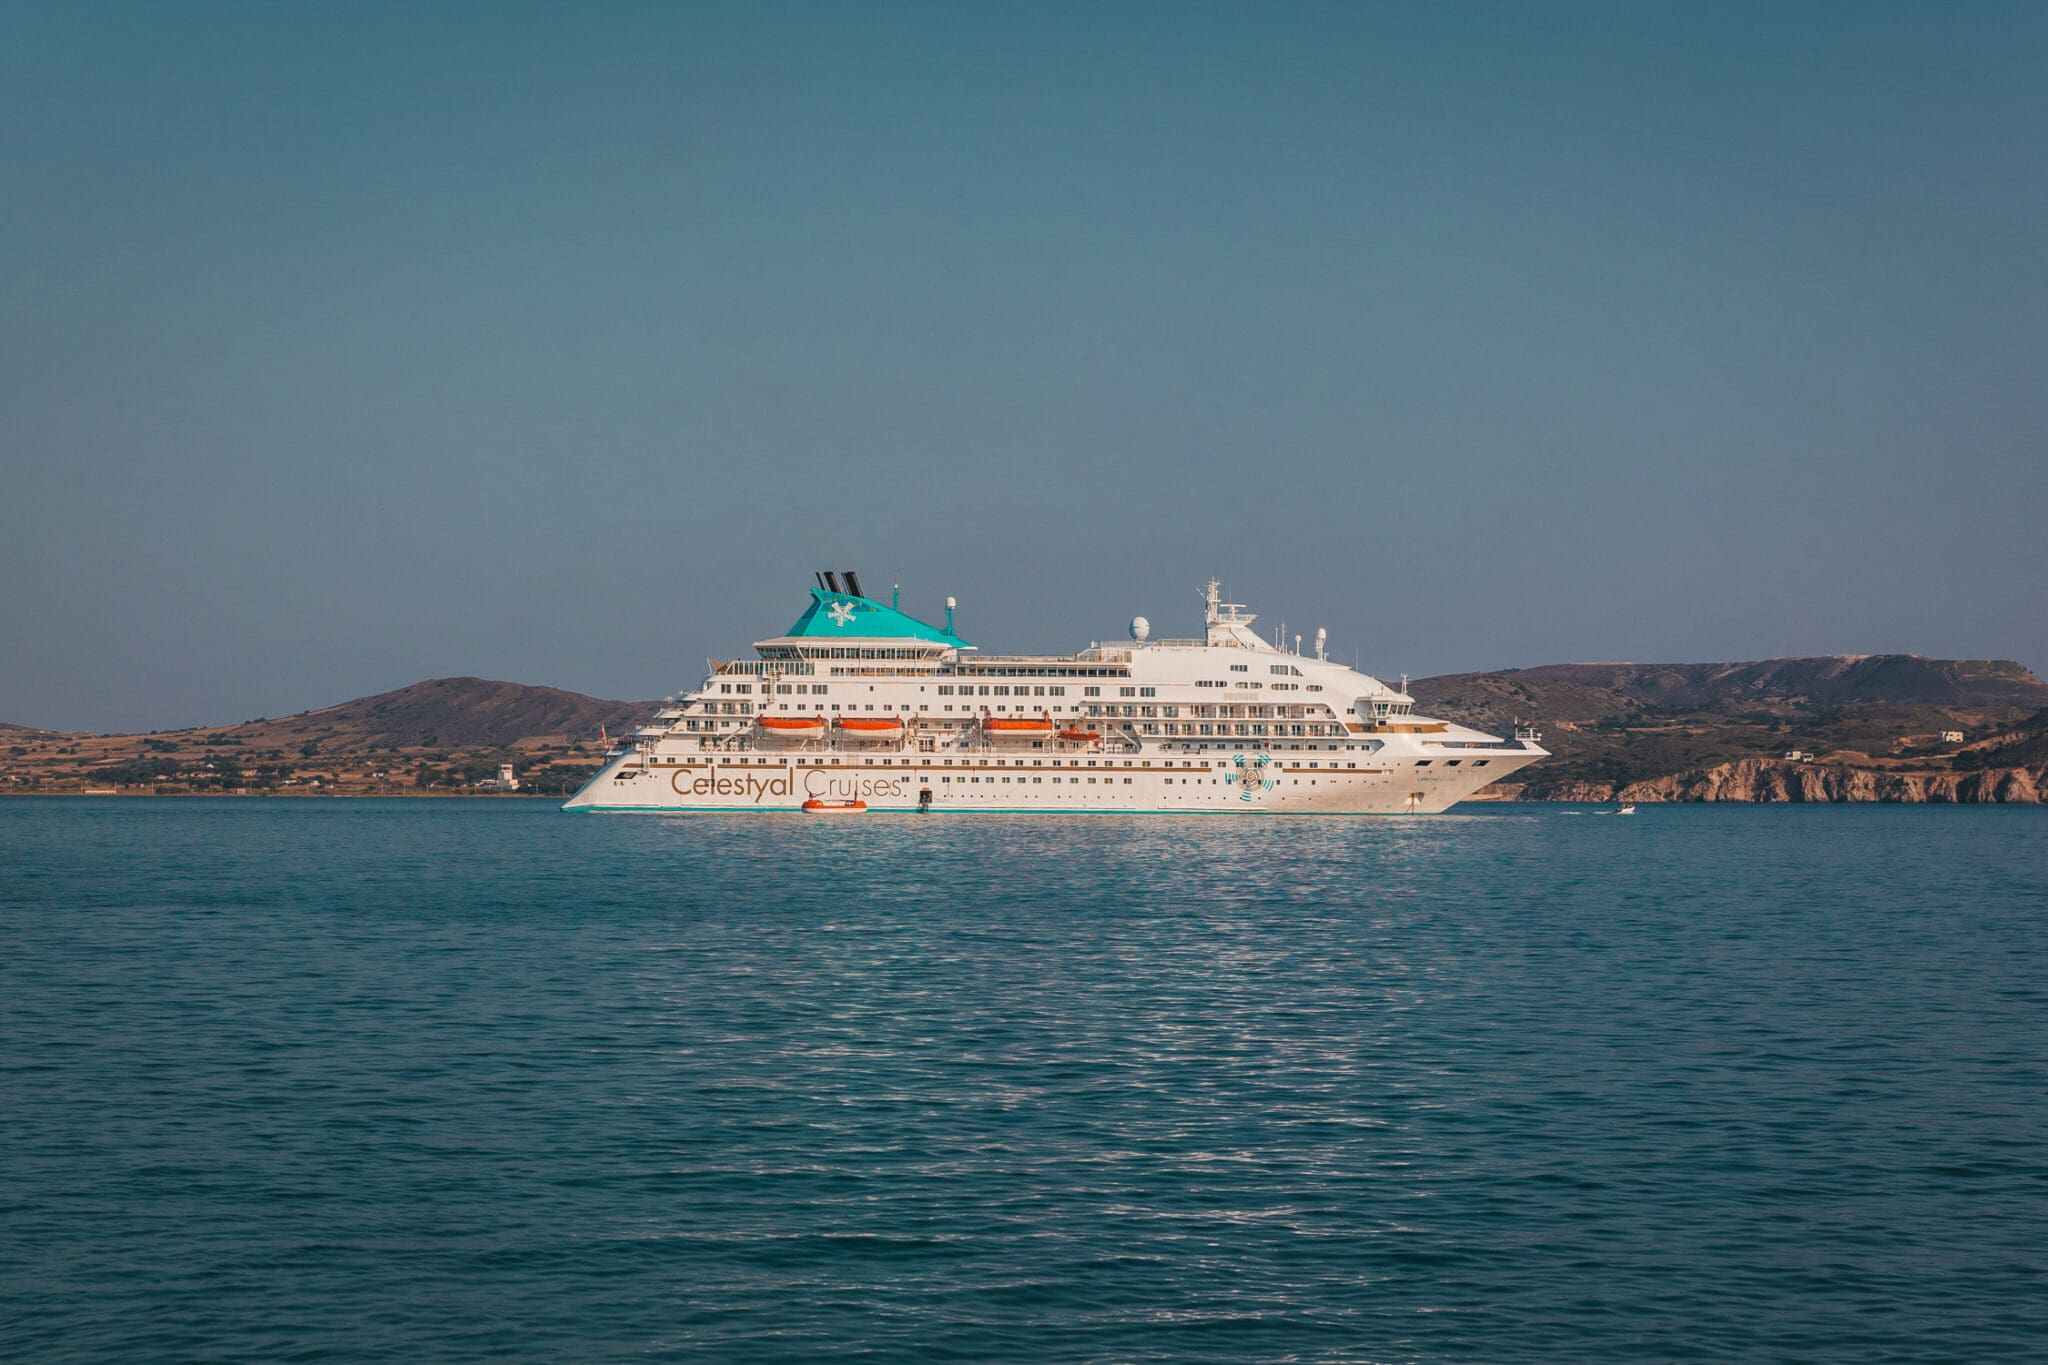 celestyal cruises excursions